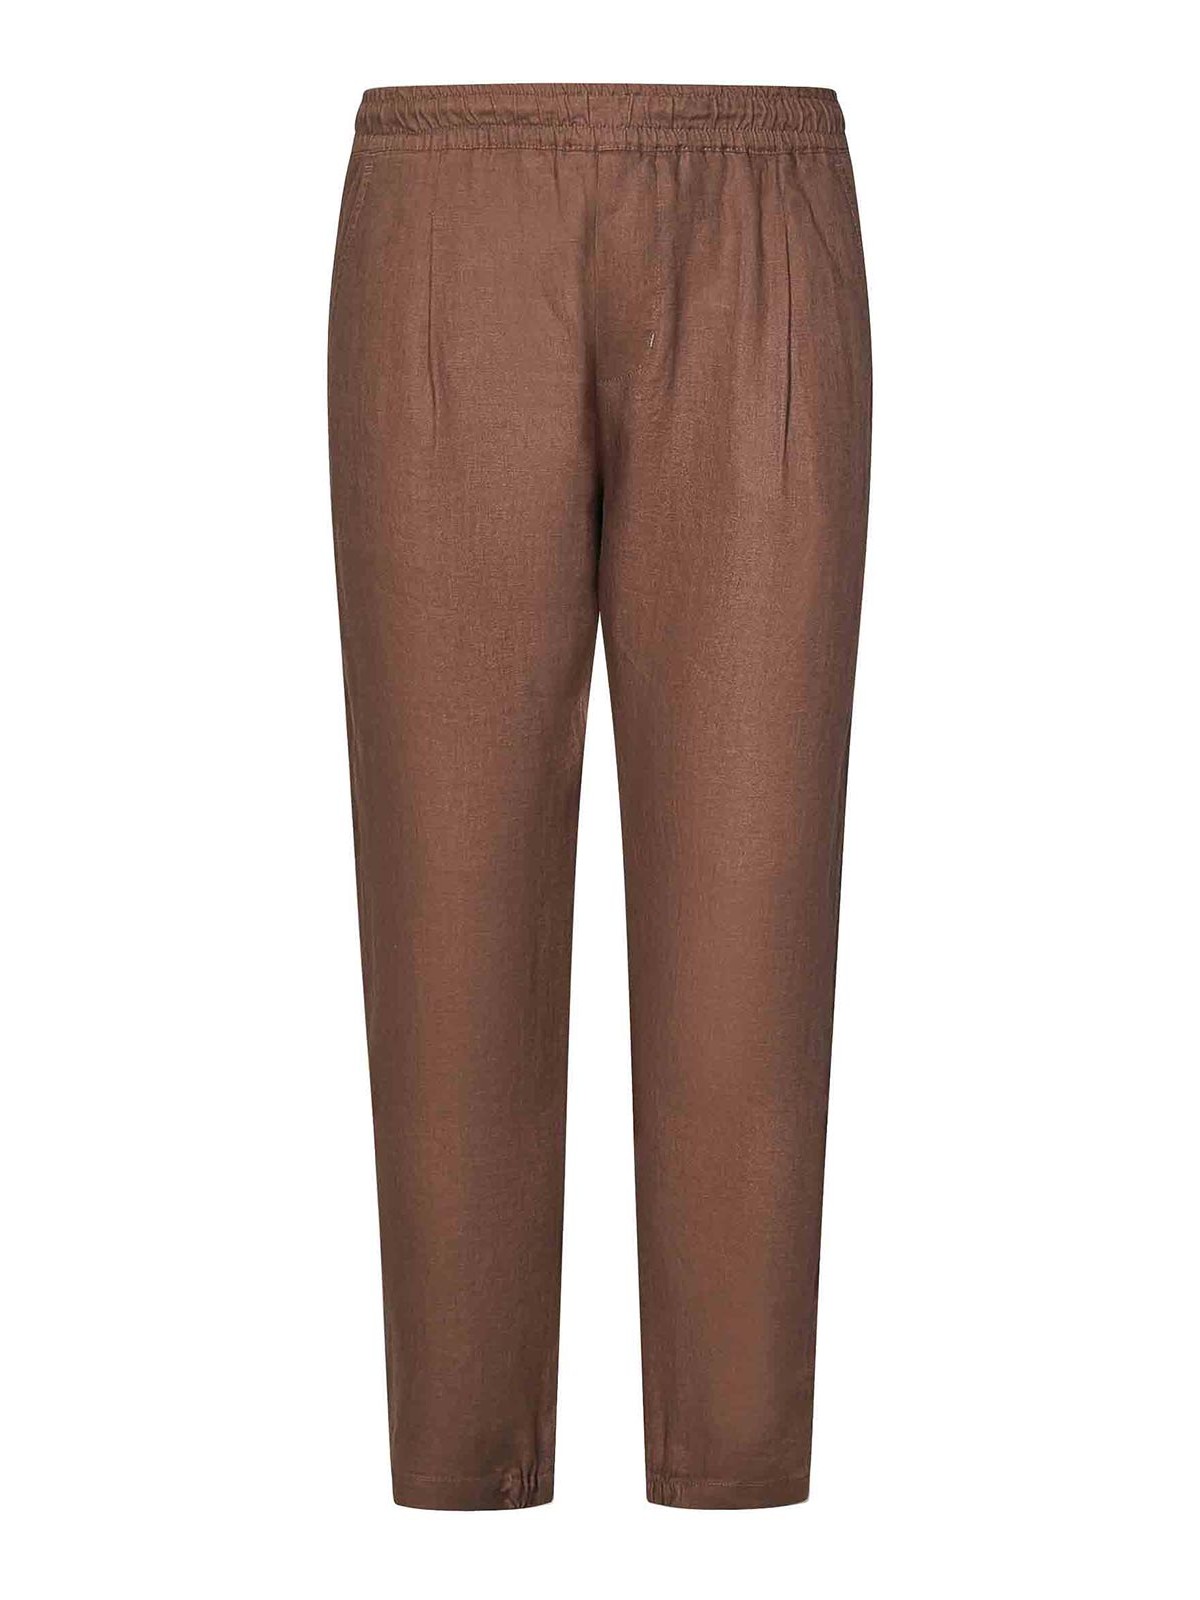 Golden Craft Brown Linen Tapered Leg Trousers